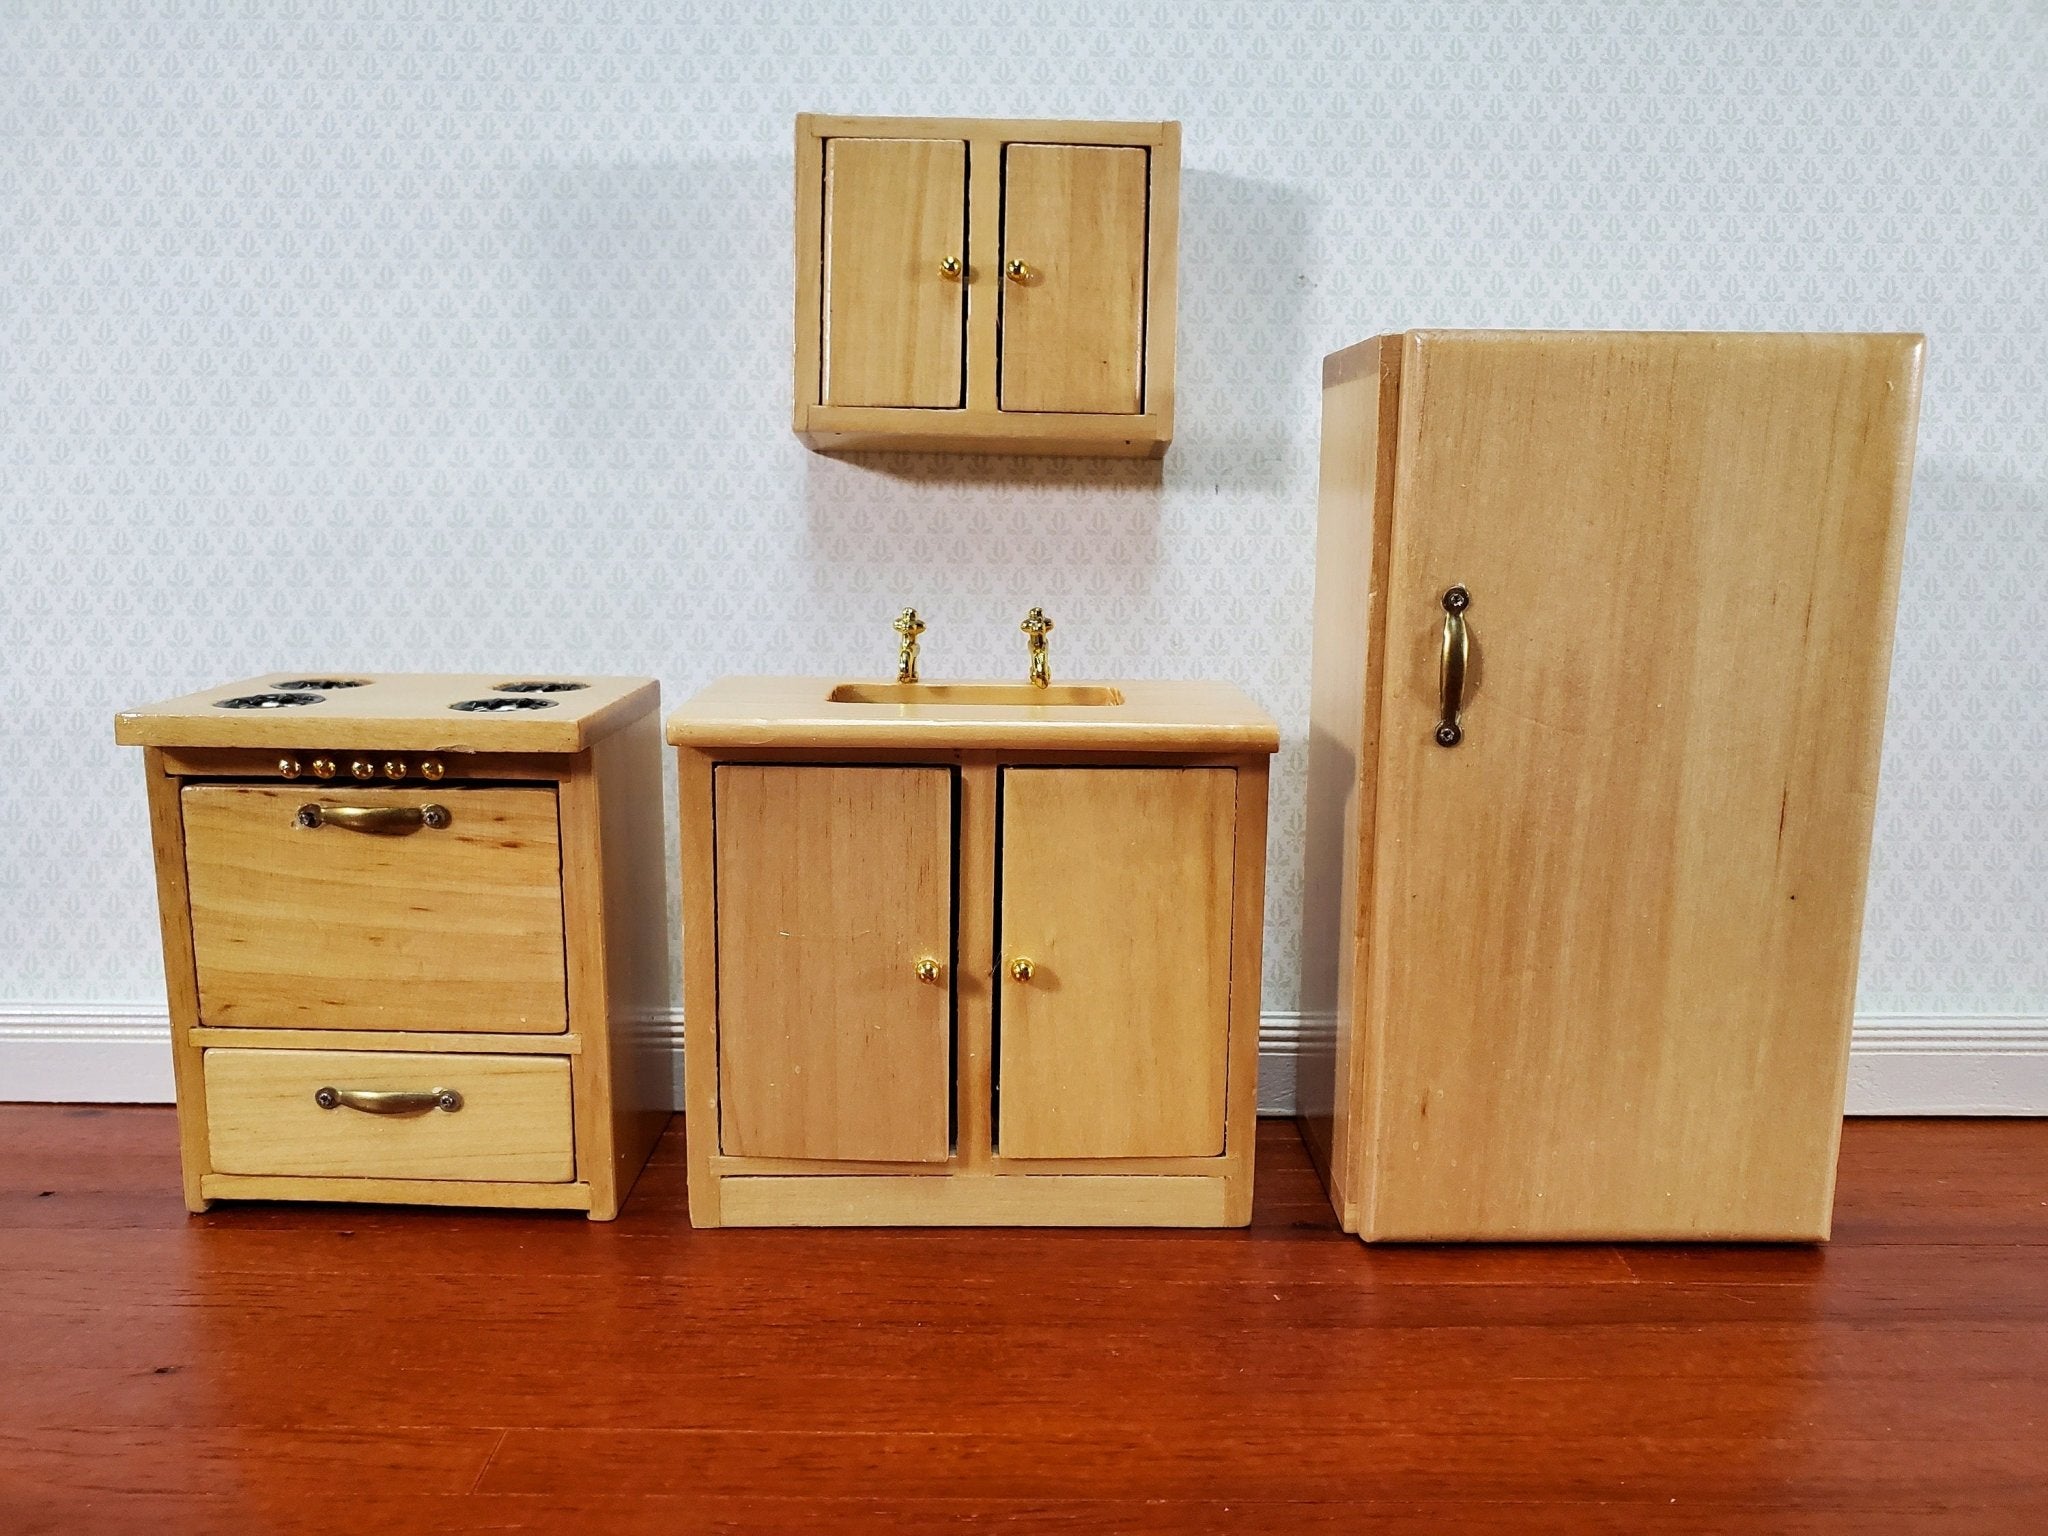 Dollhouse Miniature Kitchen Wall Set Fridge Sink Stove Oven 1:12